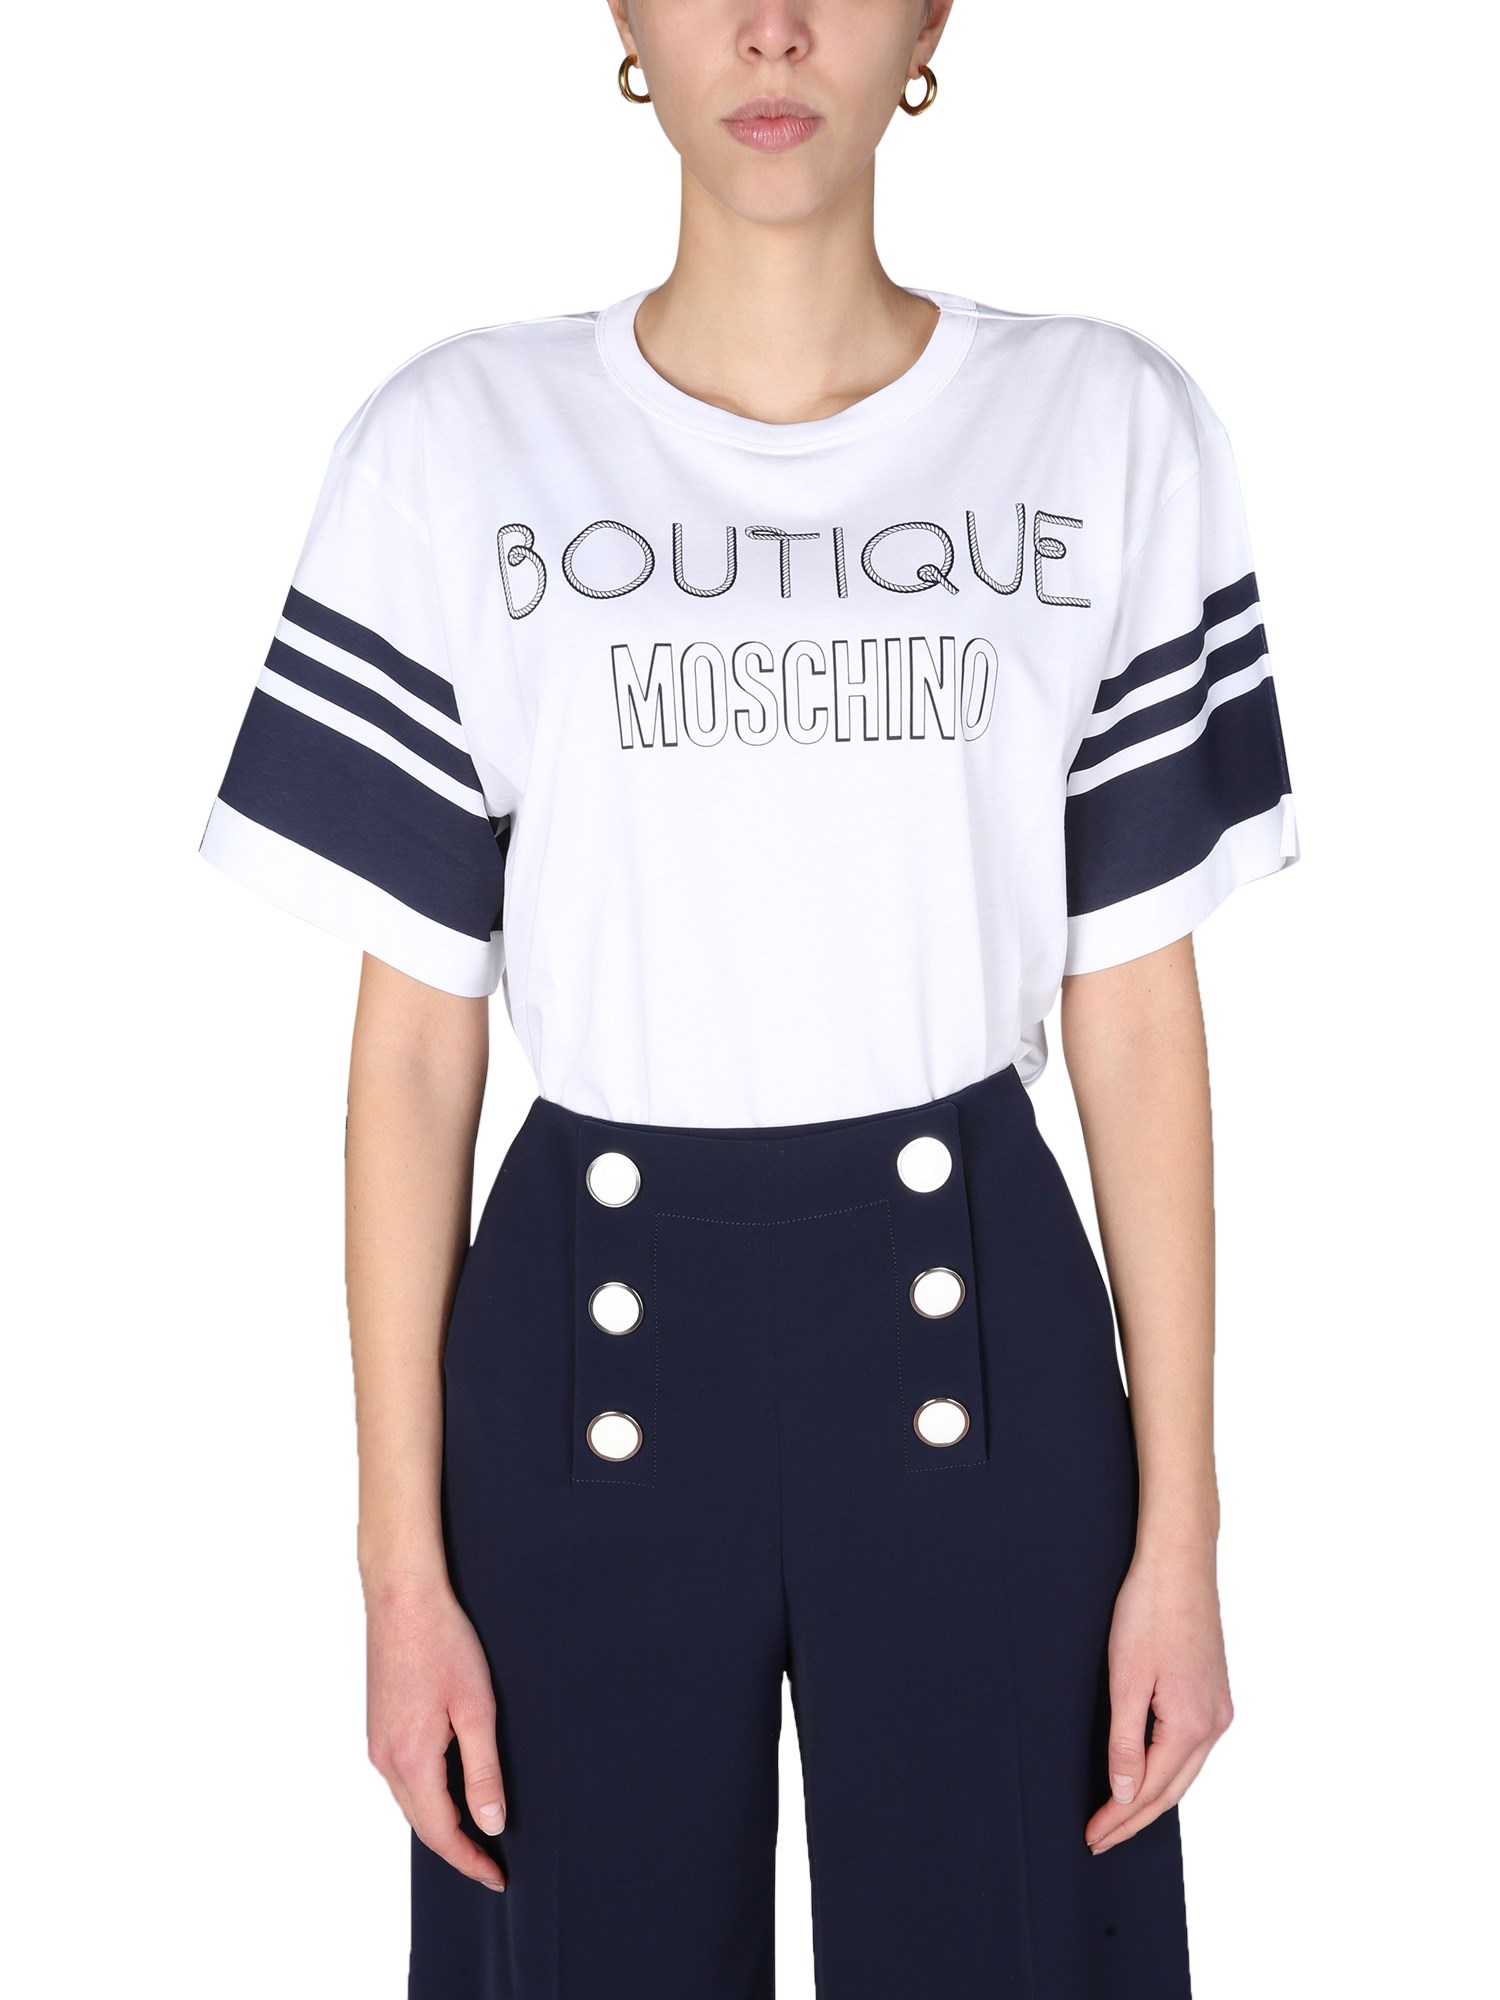 boutique moschino "sailor mood" t-shirt